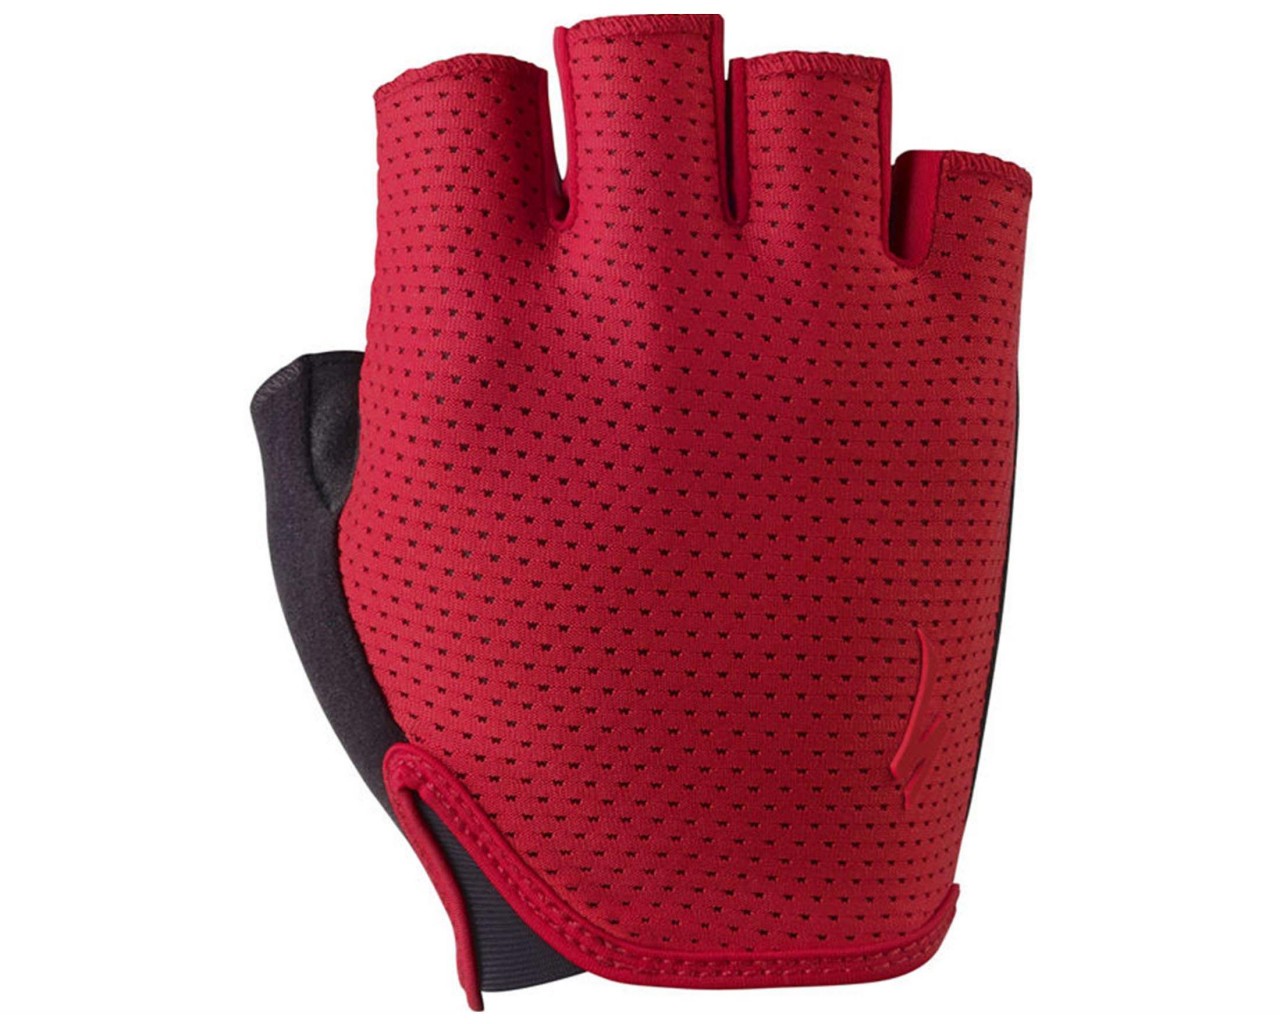 Specialized Grail Kurzfinger Handschuhe | Red